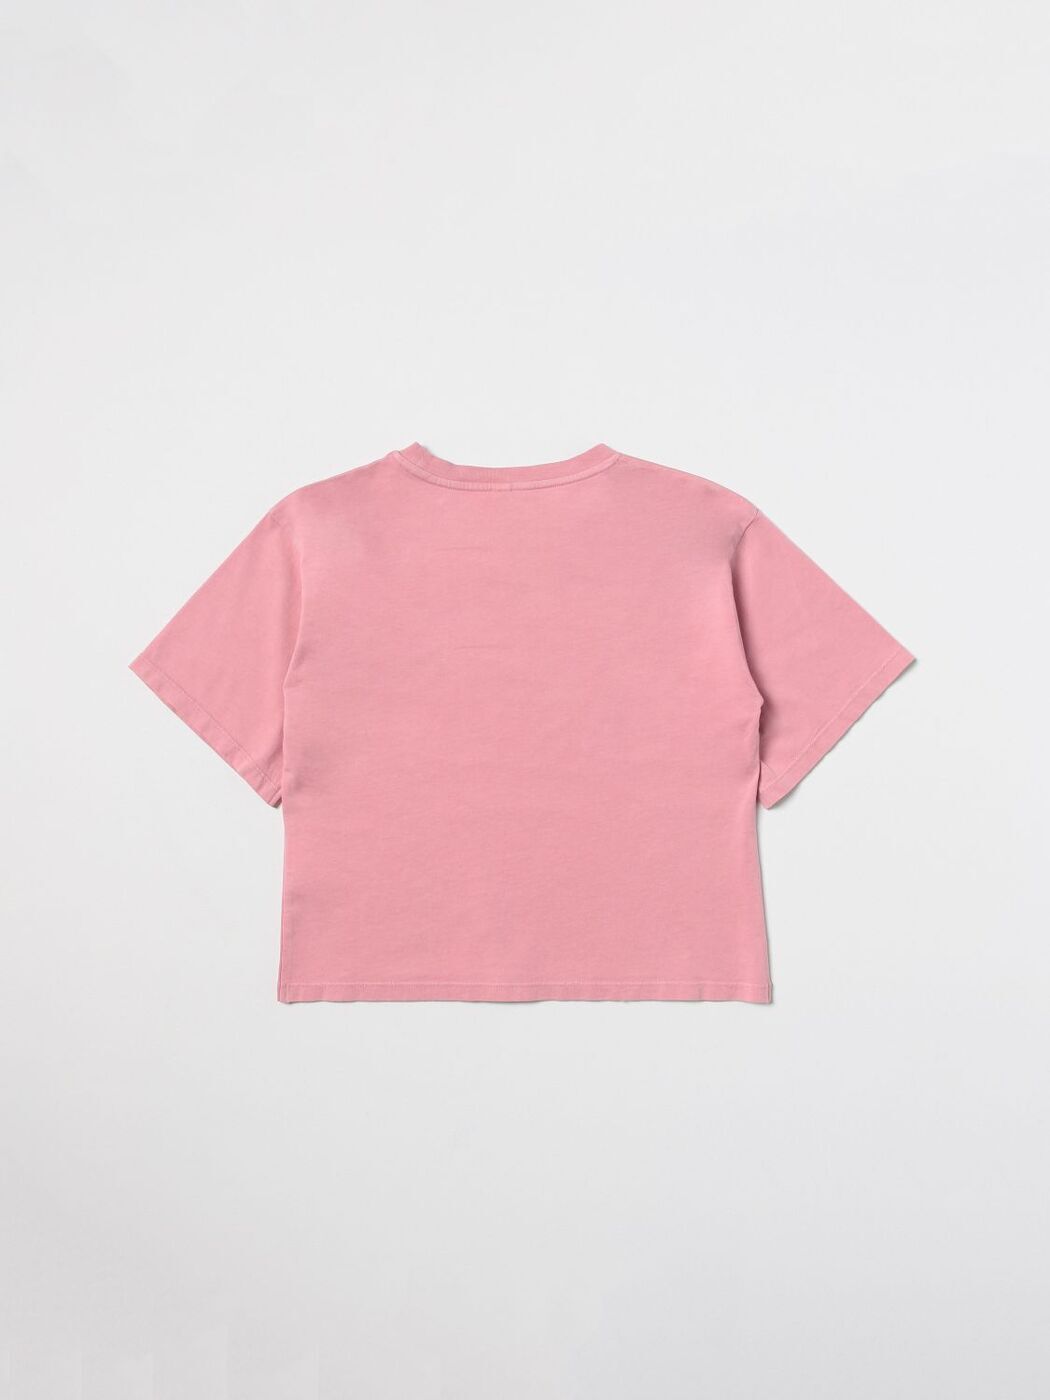 STELLA MCCARTNEY ステラマッカートニー ピンク Pink Tシャツ ガールズ